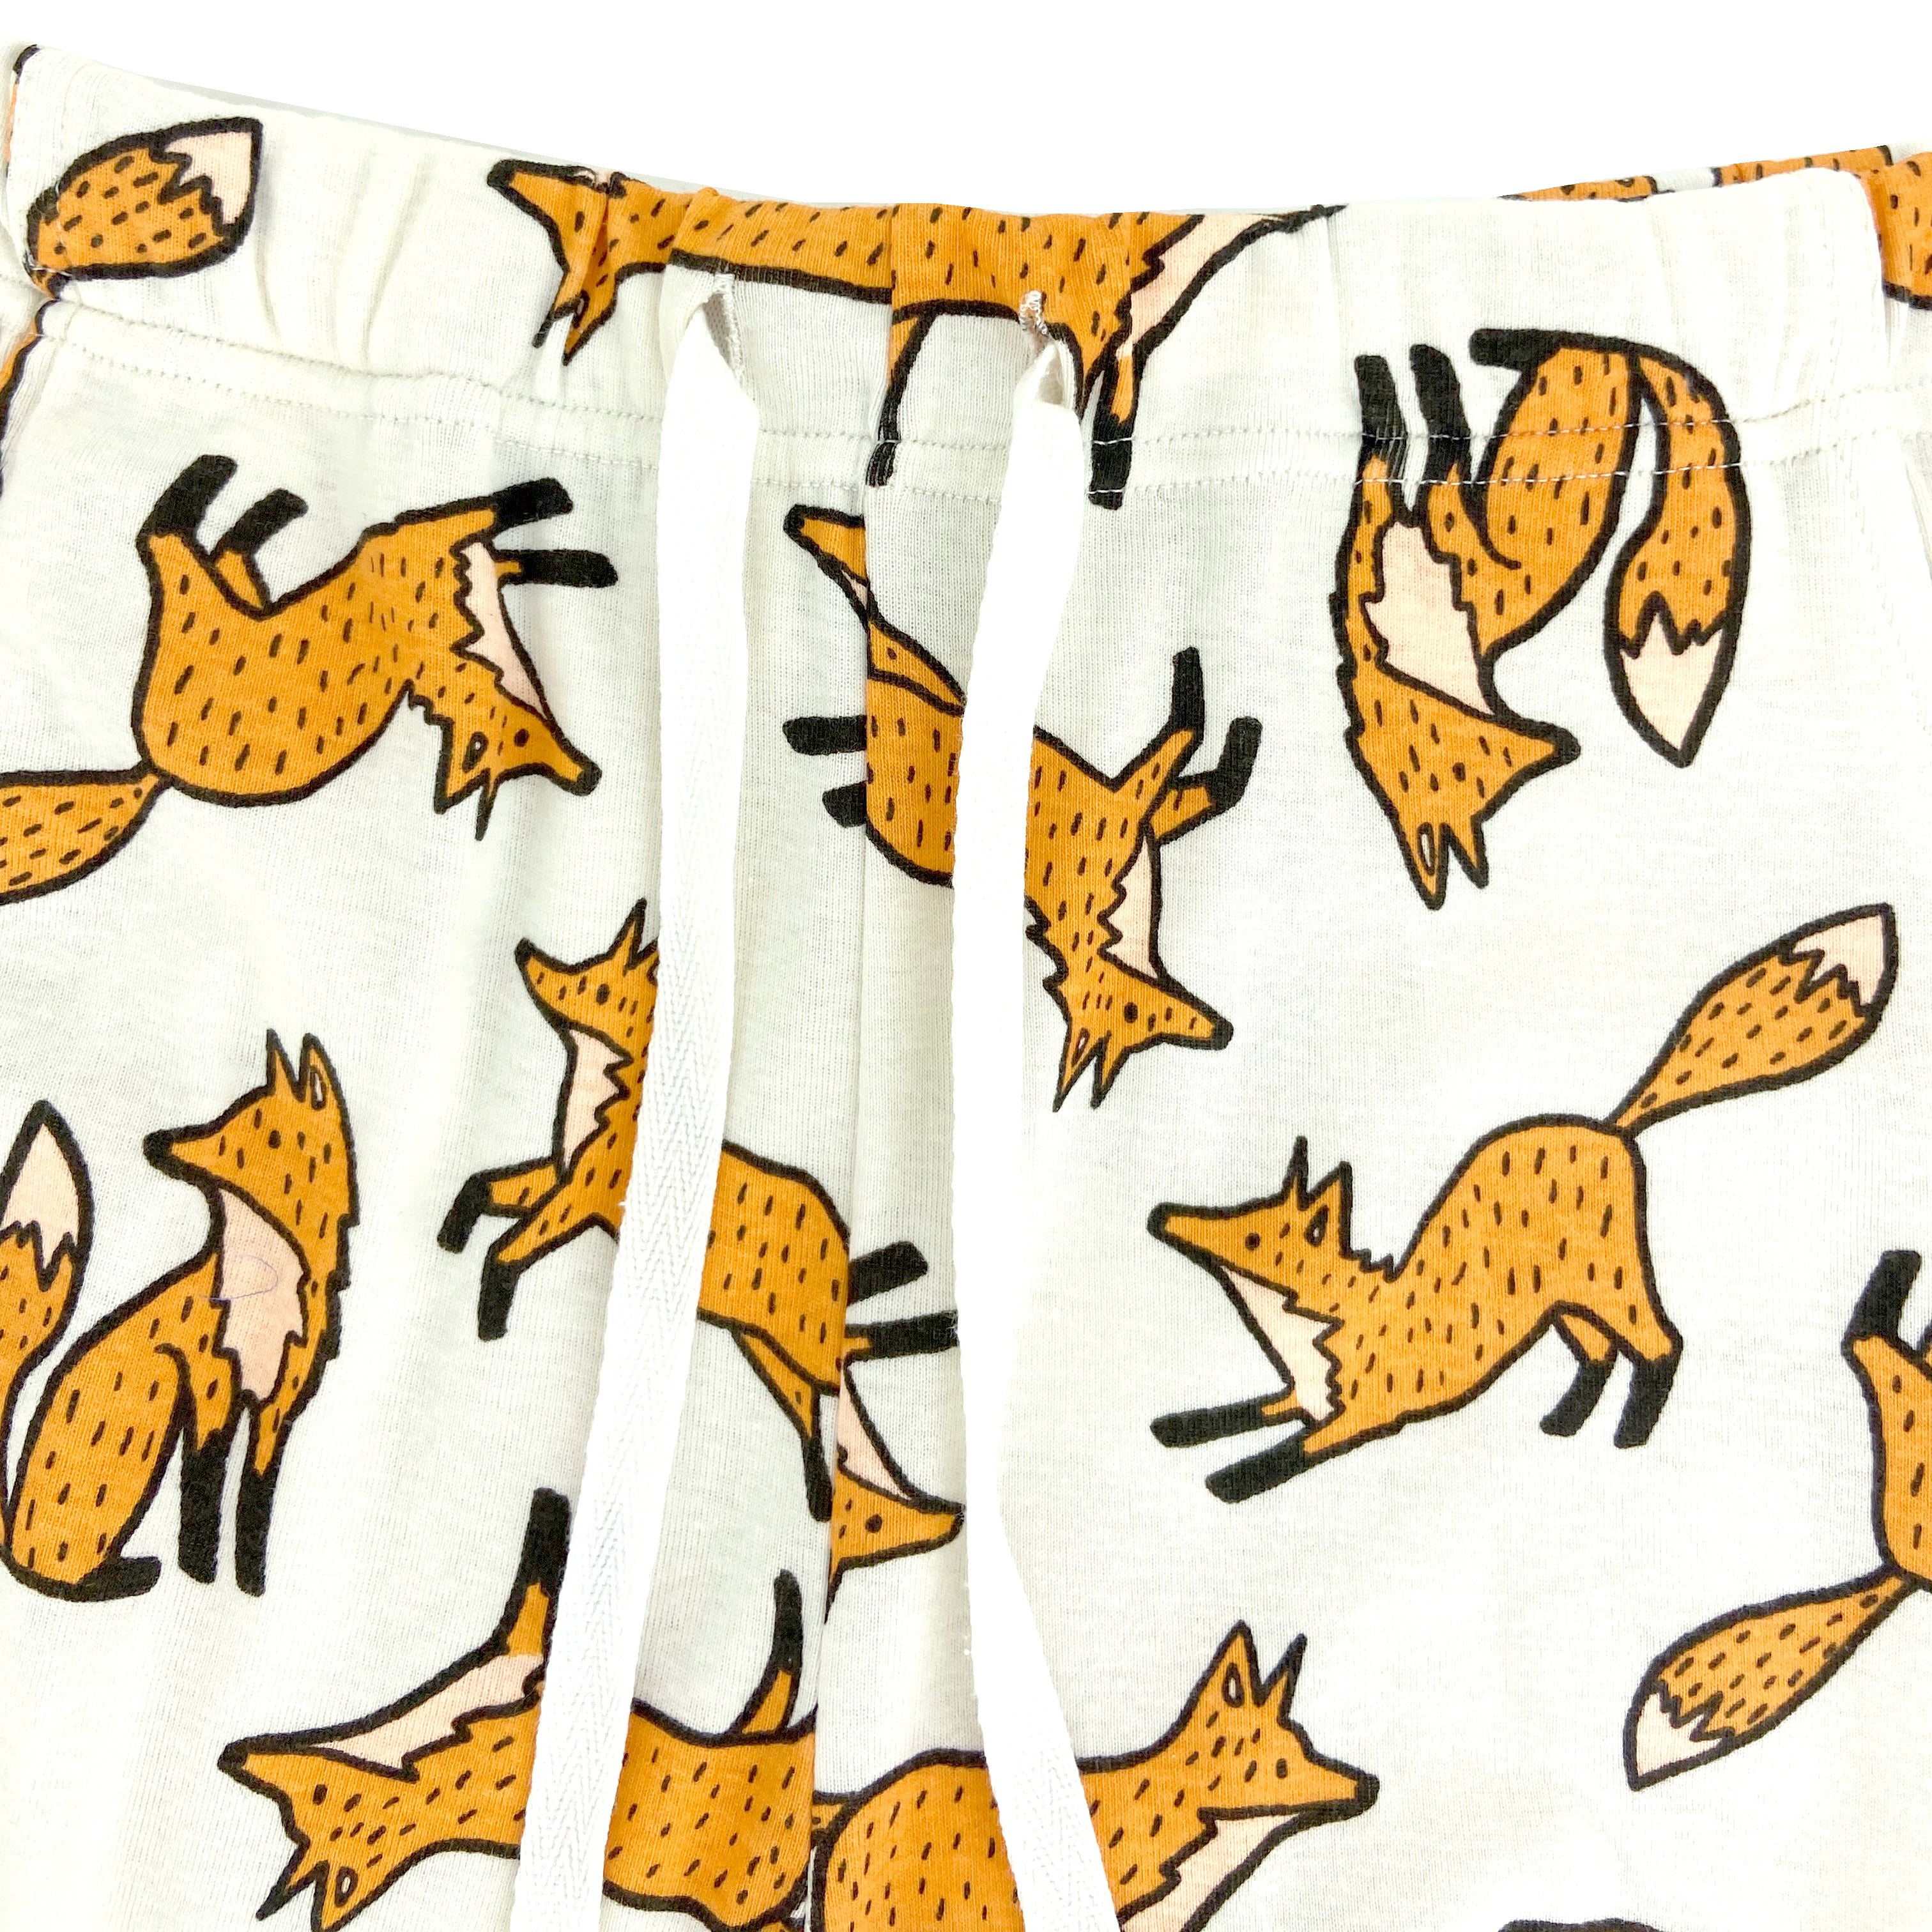 Purple Fox Pajama Pants For Women. New Women's Fox Print Lounge Pants